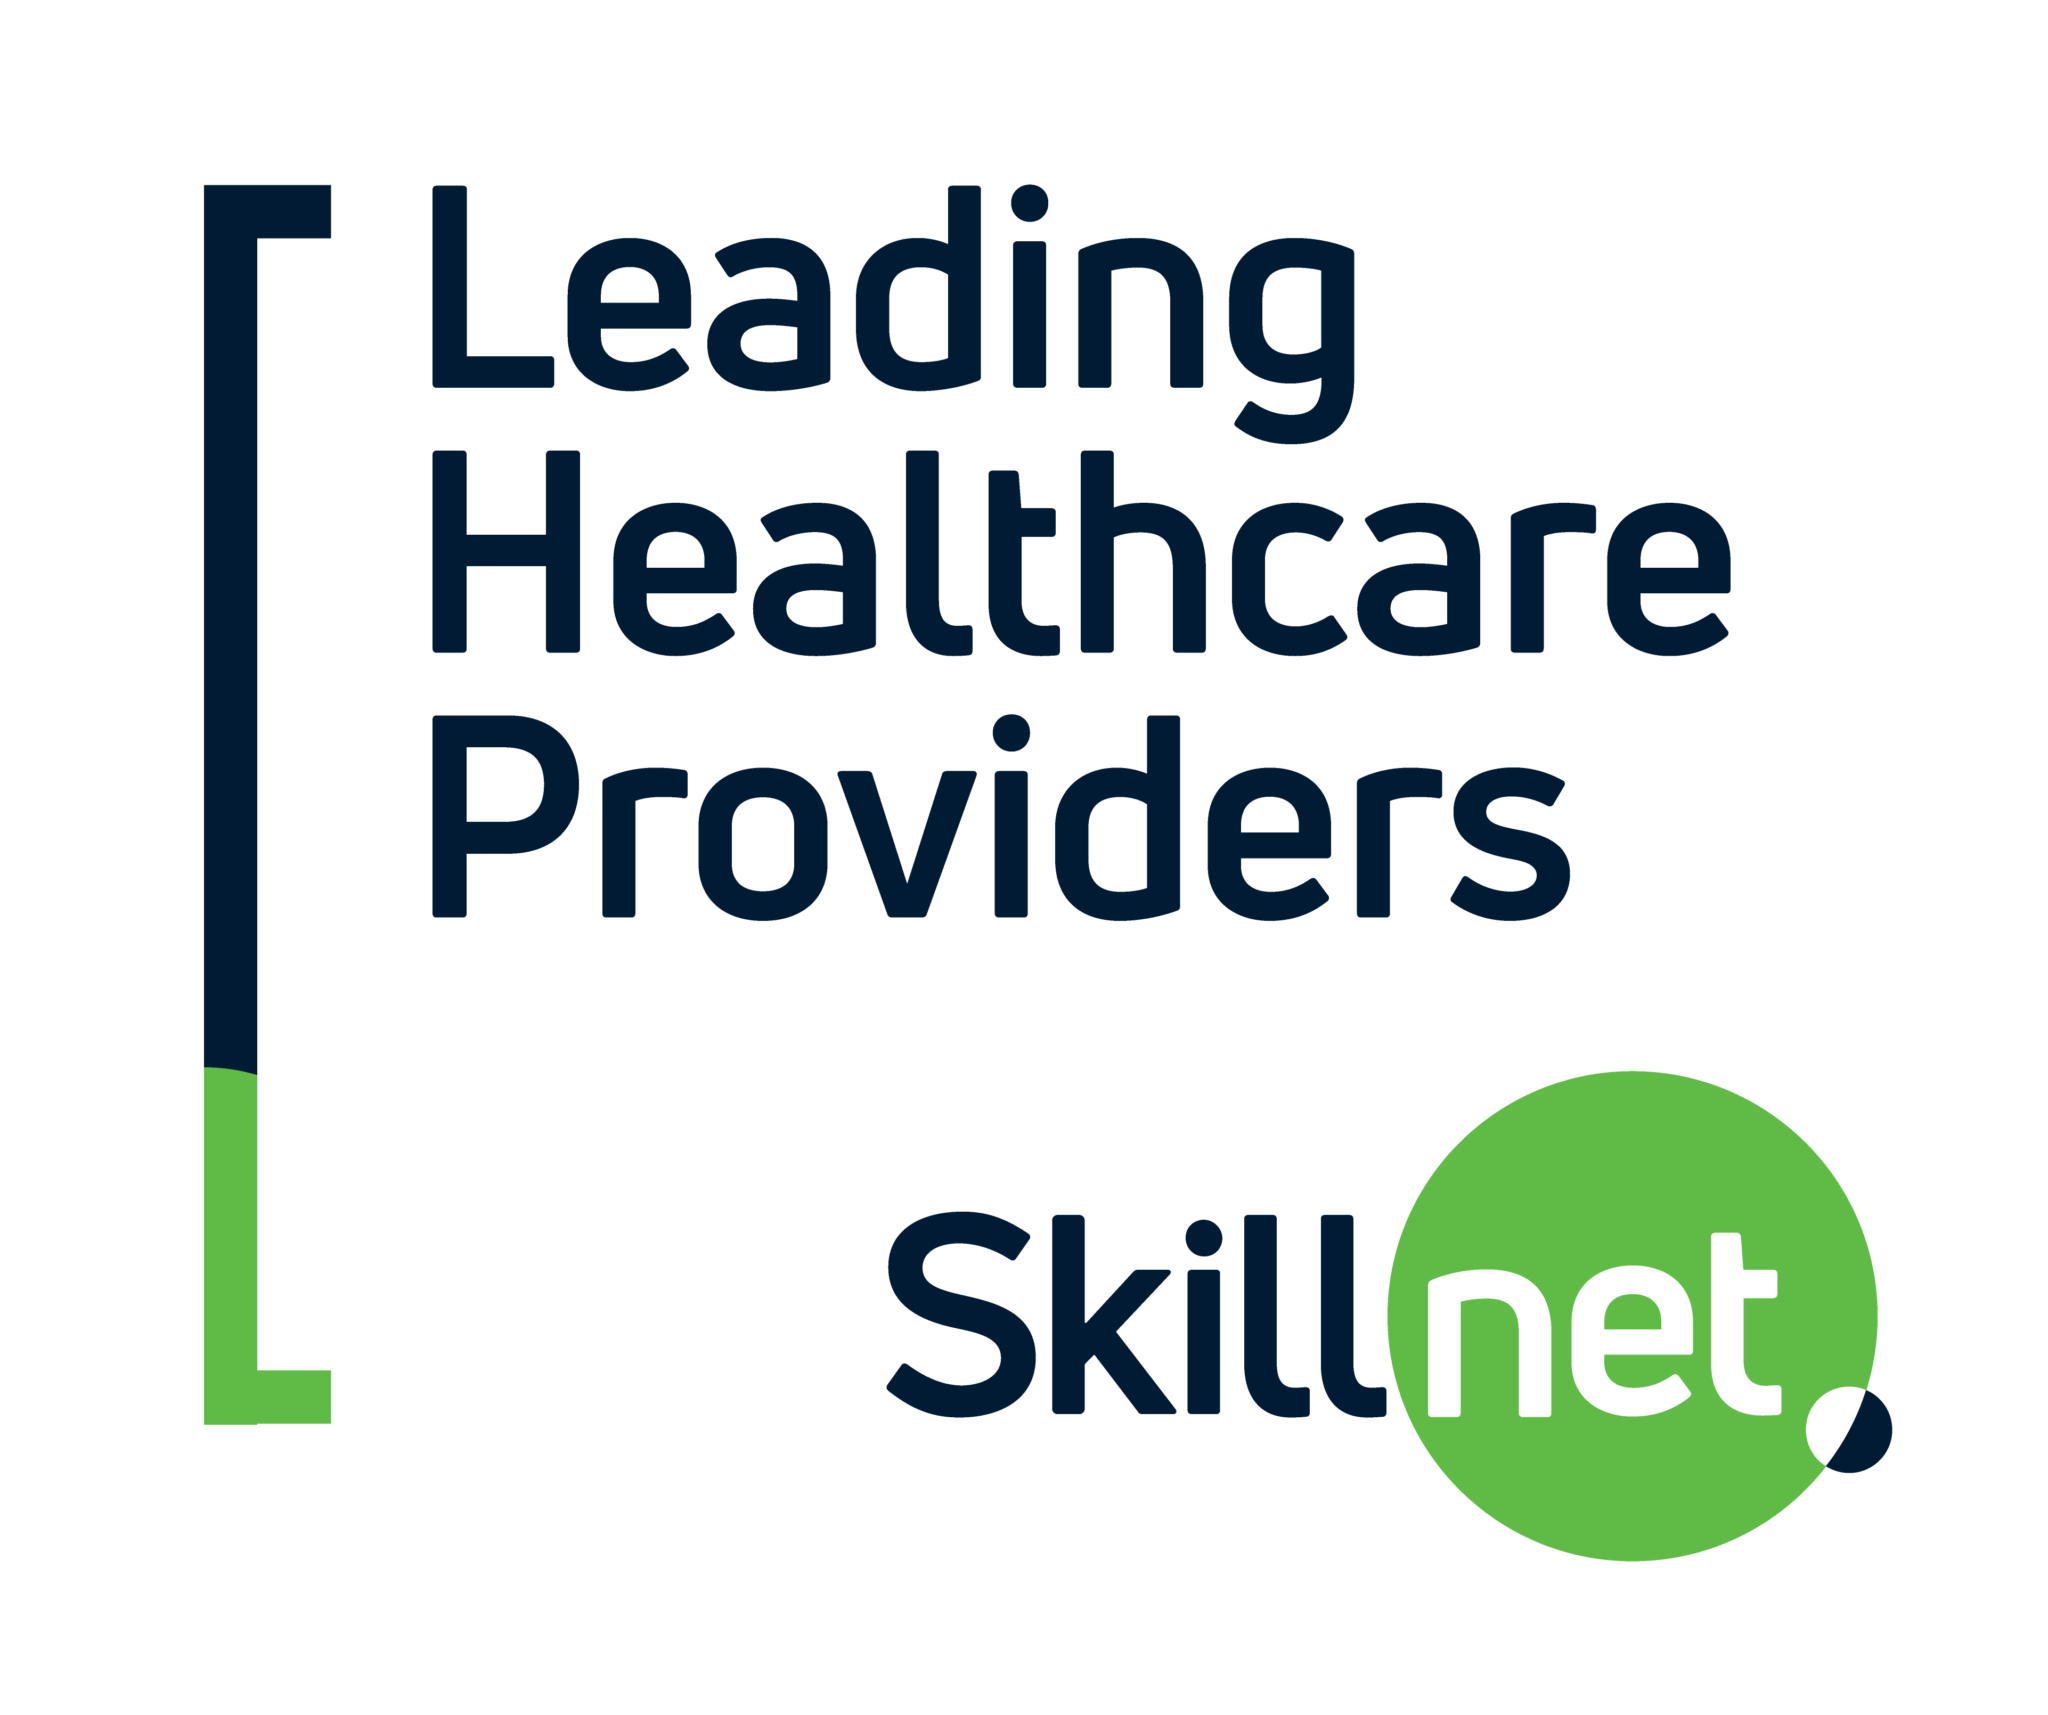 Leading Healthcare Providers Skillnet